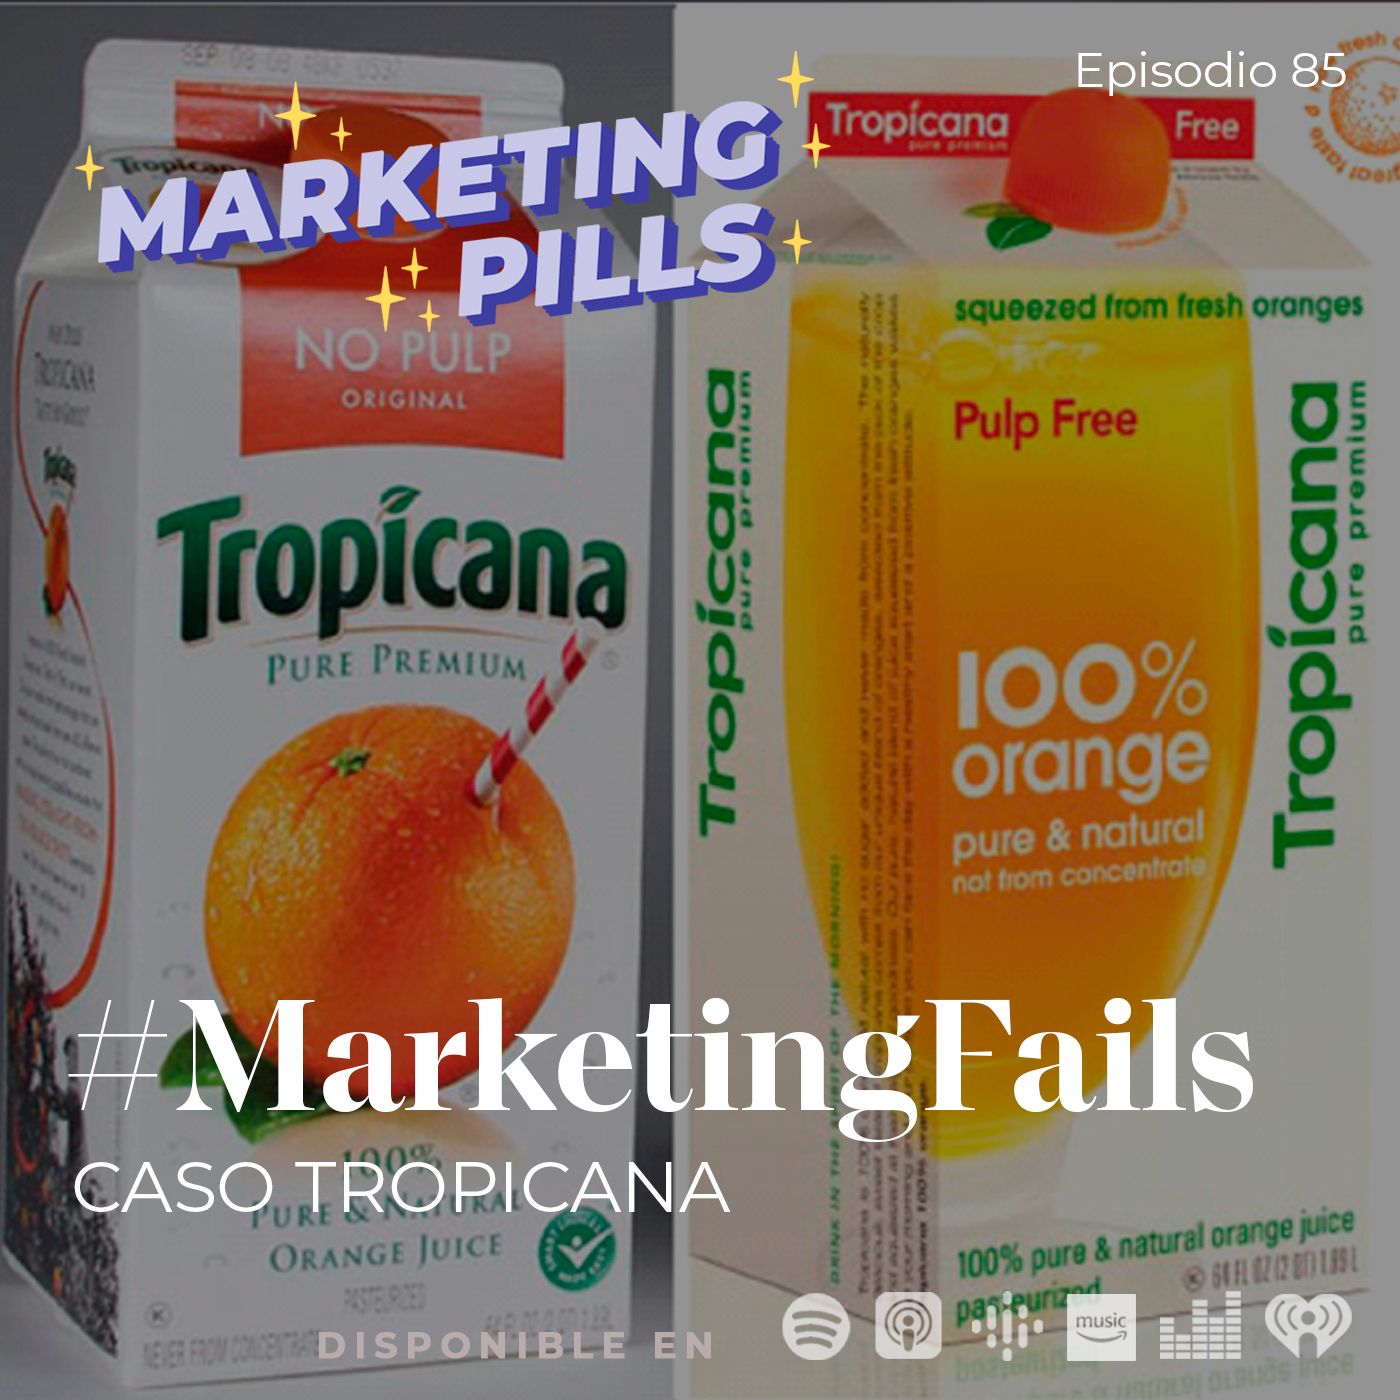 ⚡Episodio 85 - #MarketingFails: Caso Tropicana